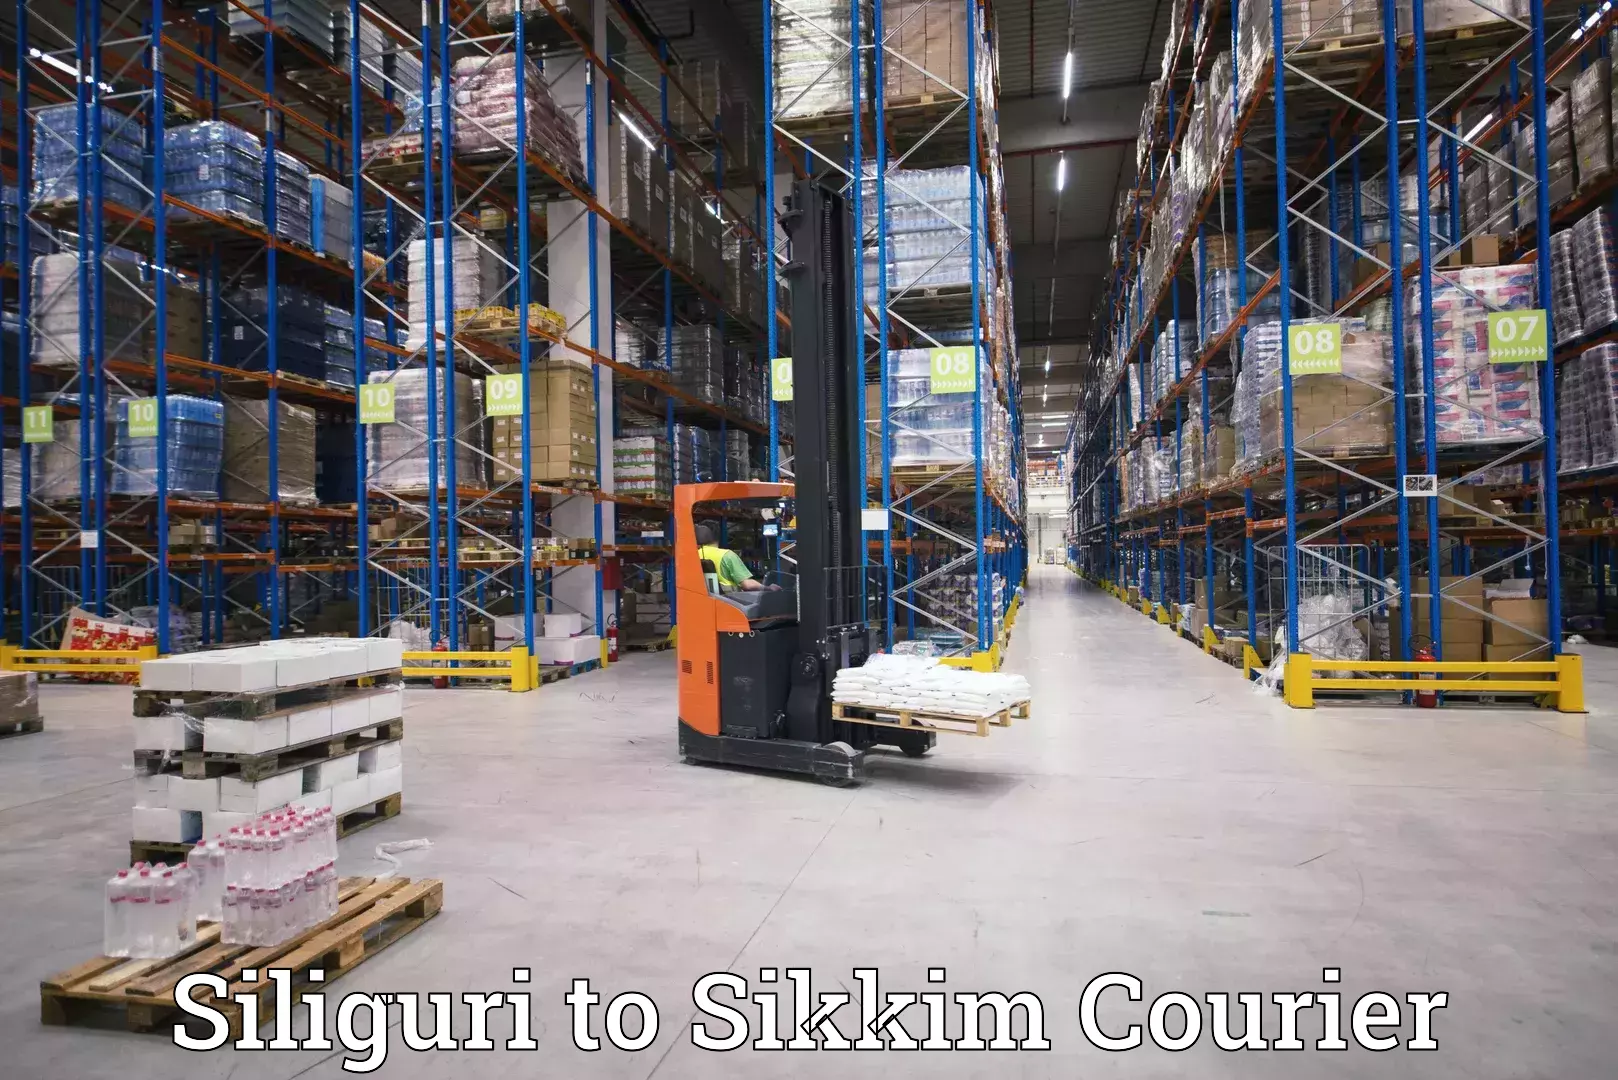 Courier service comparison Siliguri to Mangan